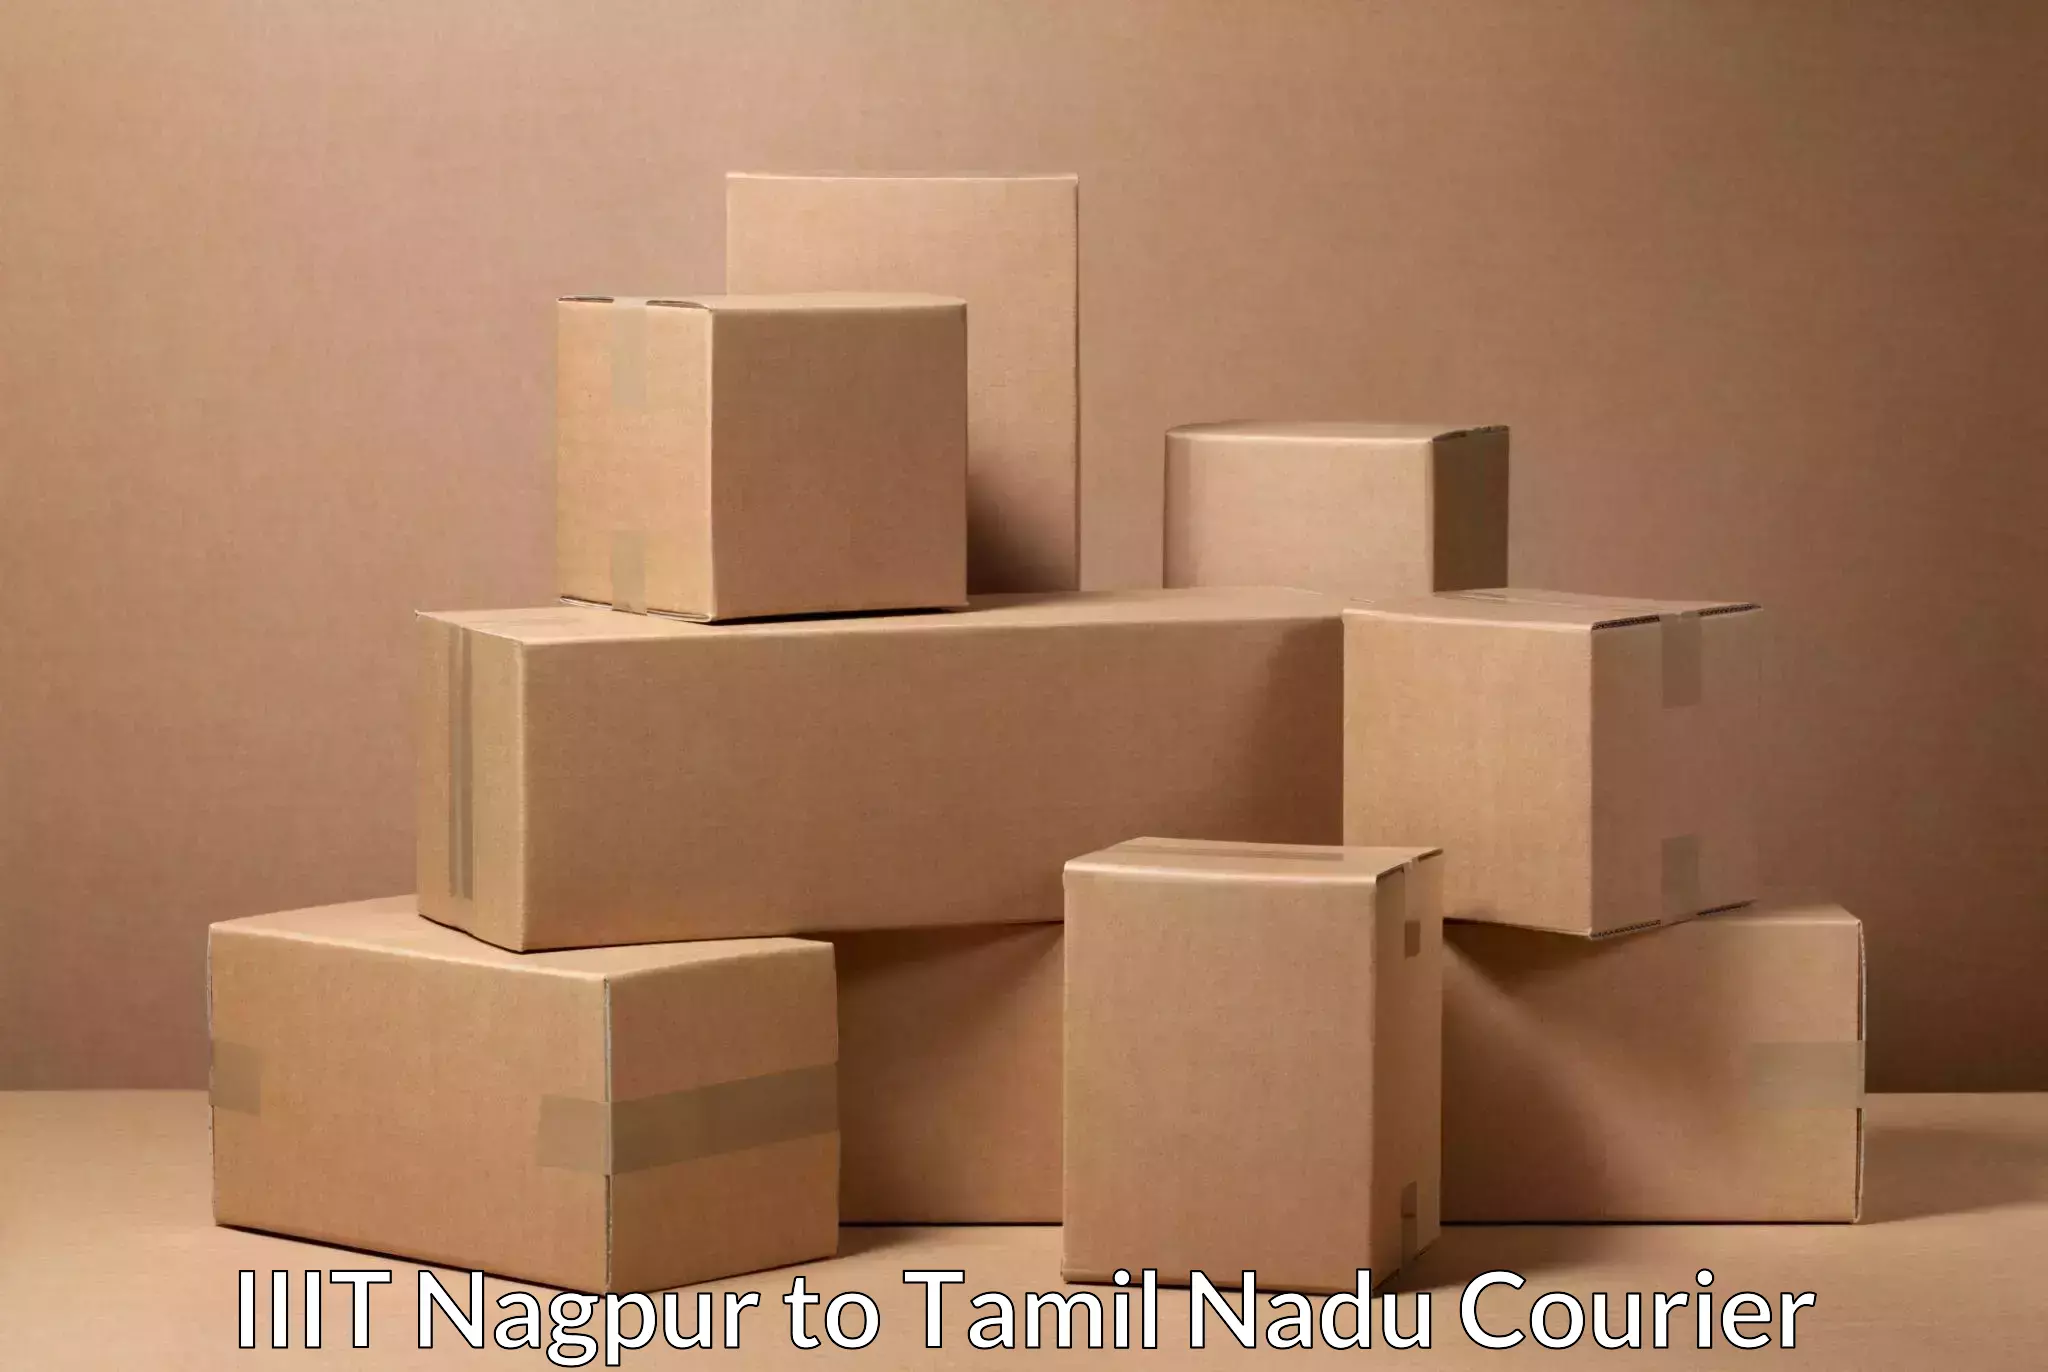 Customer-centric shipping IIIT Nagpur to Tirupur